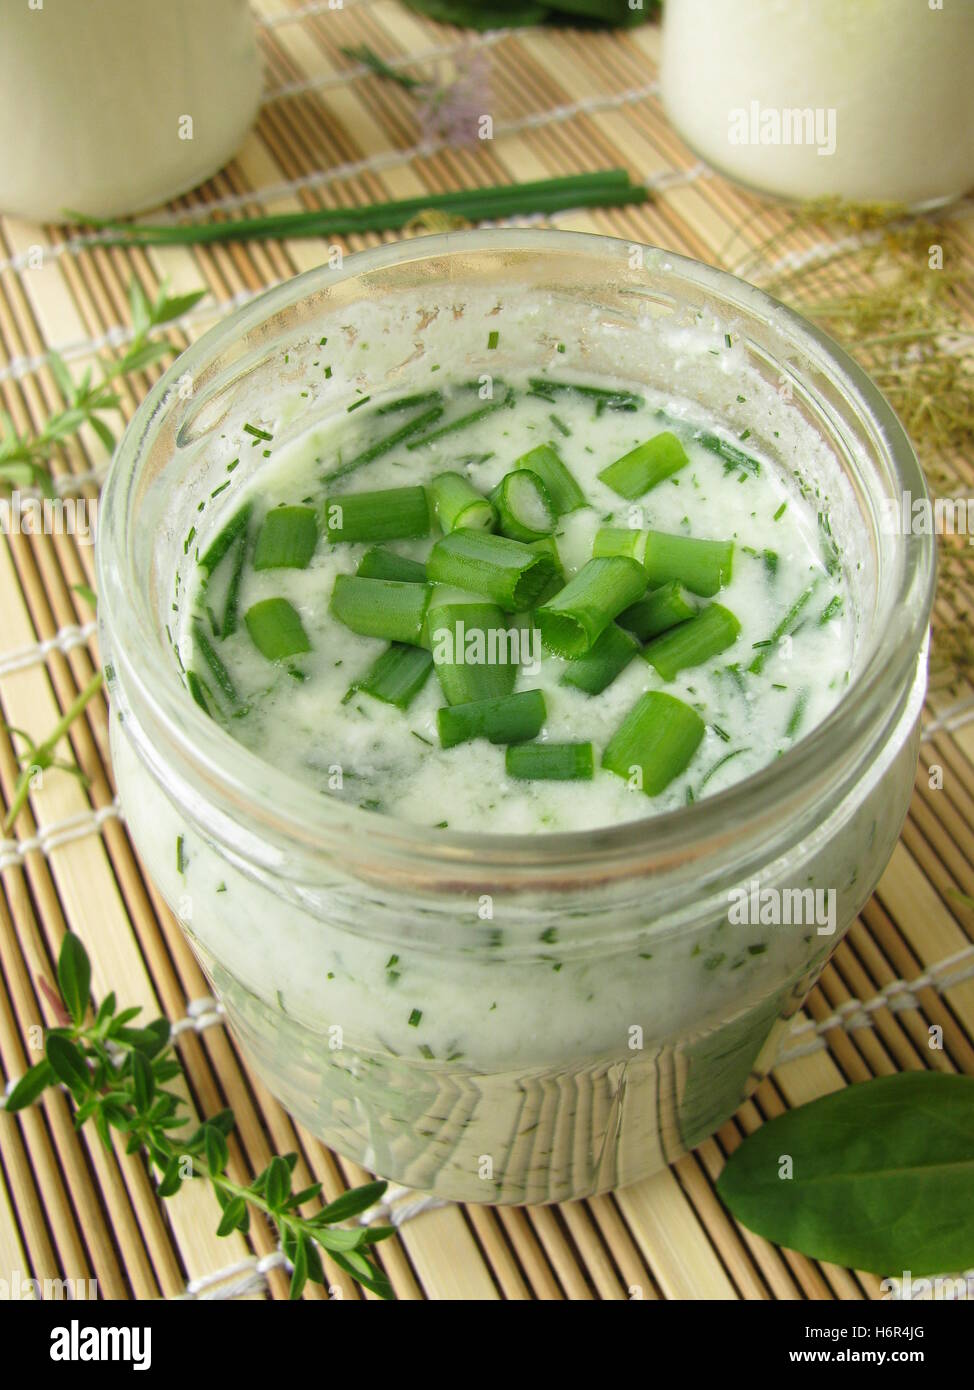 green yogurt smoothie with garden herbs Stock Photo